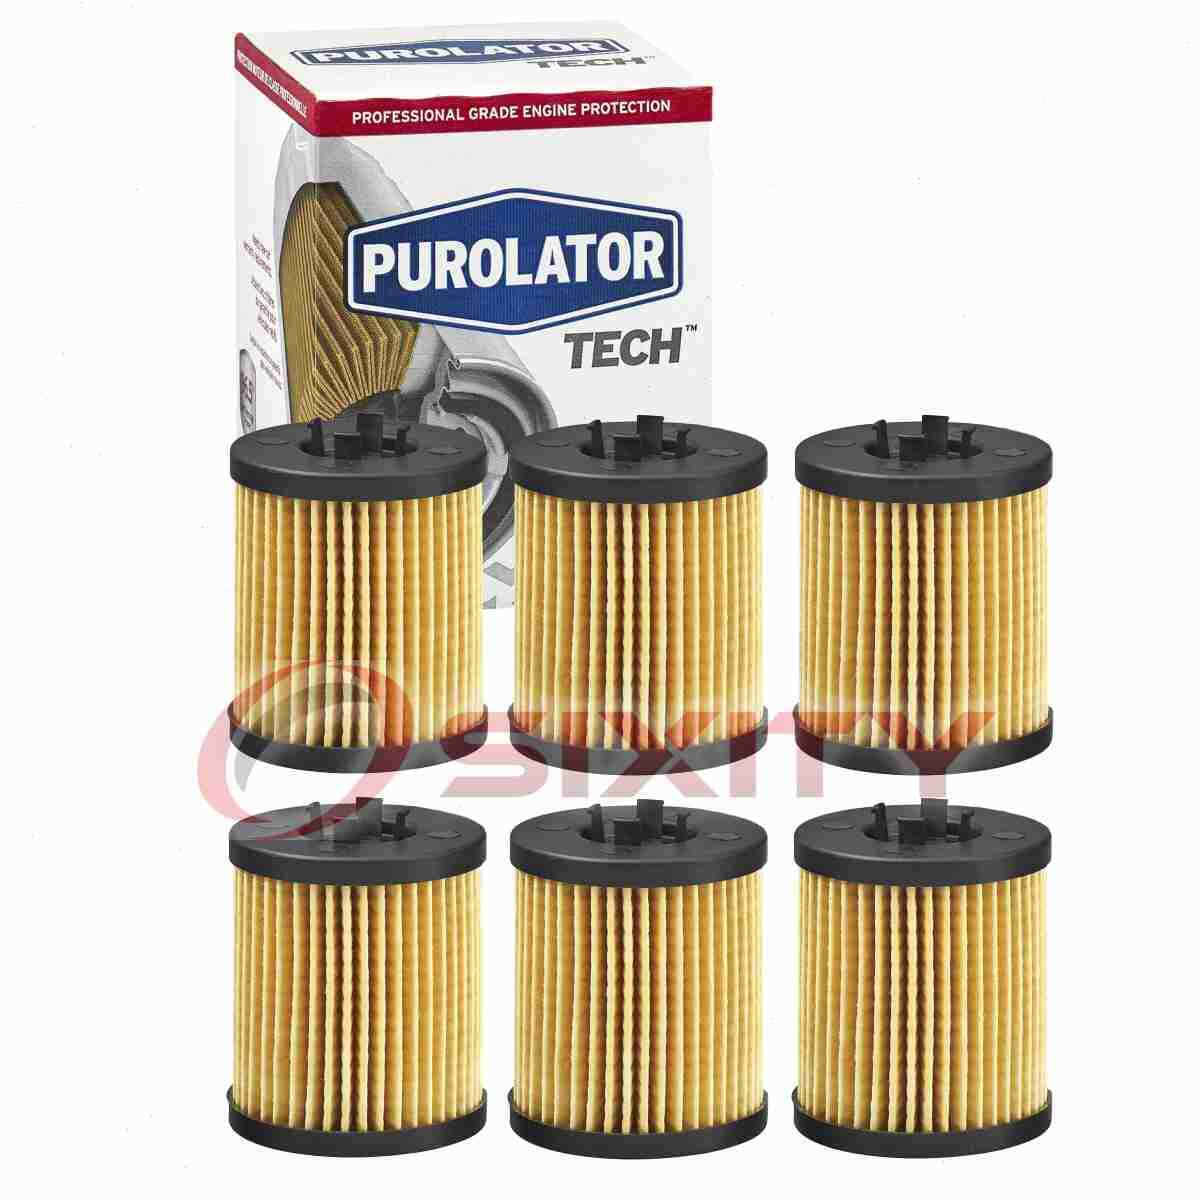 6 pc Purolator TECH TL15309 Engine Oil Filters for X5309 WP2224 WEC-8806 pl